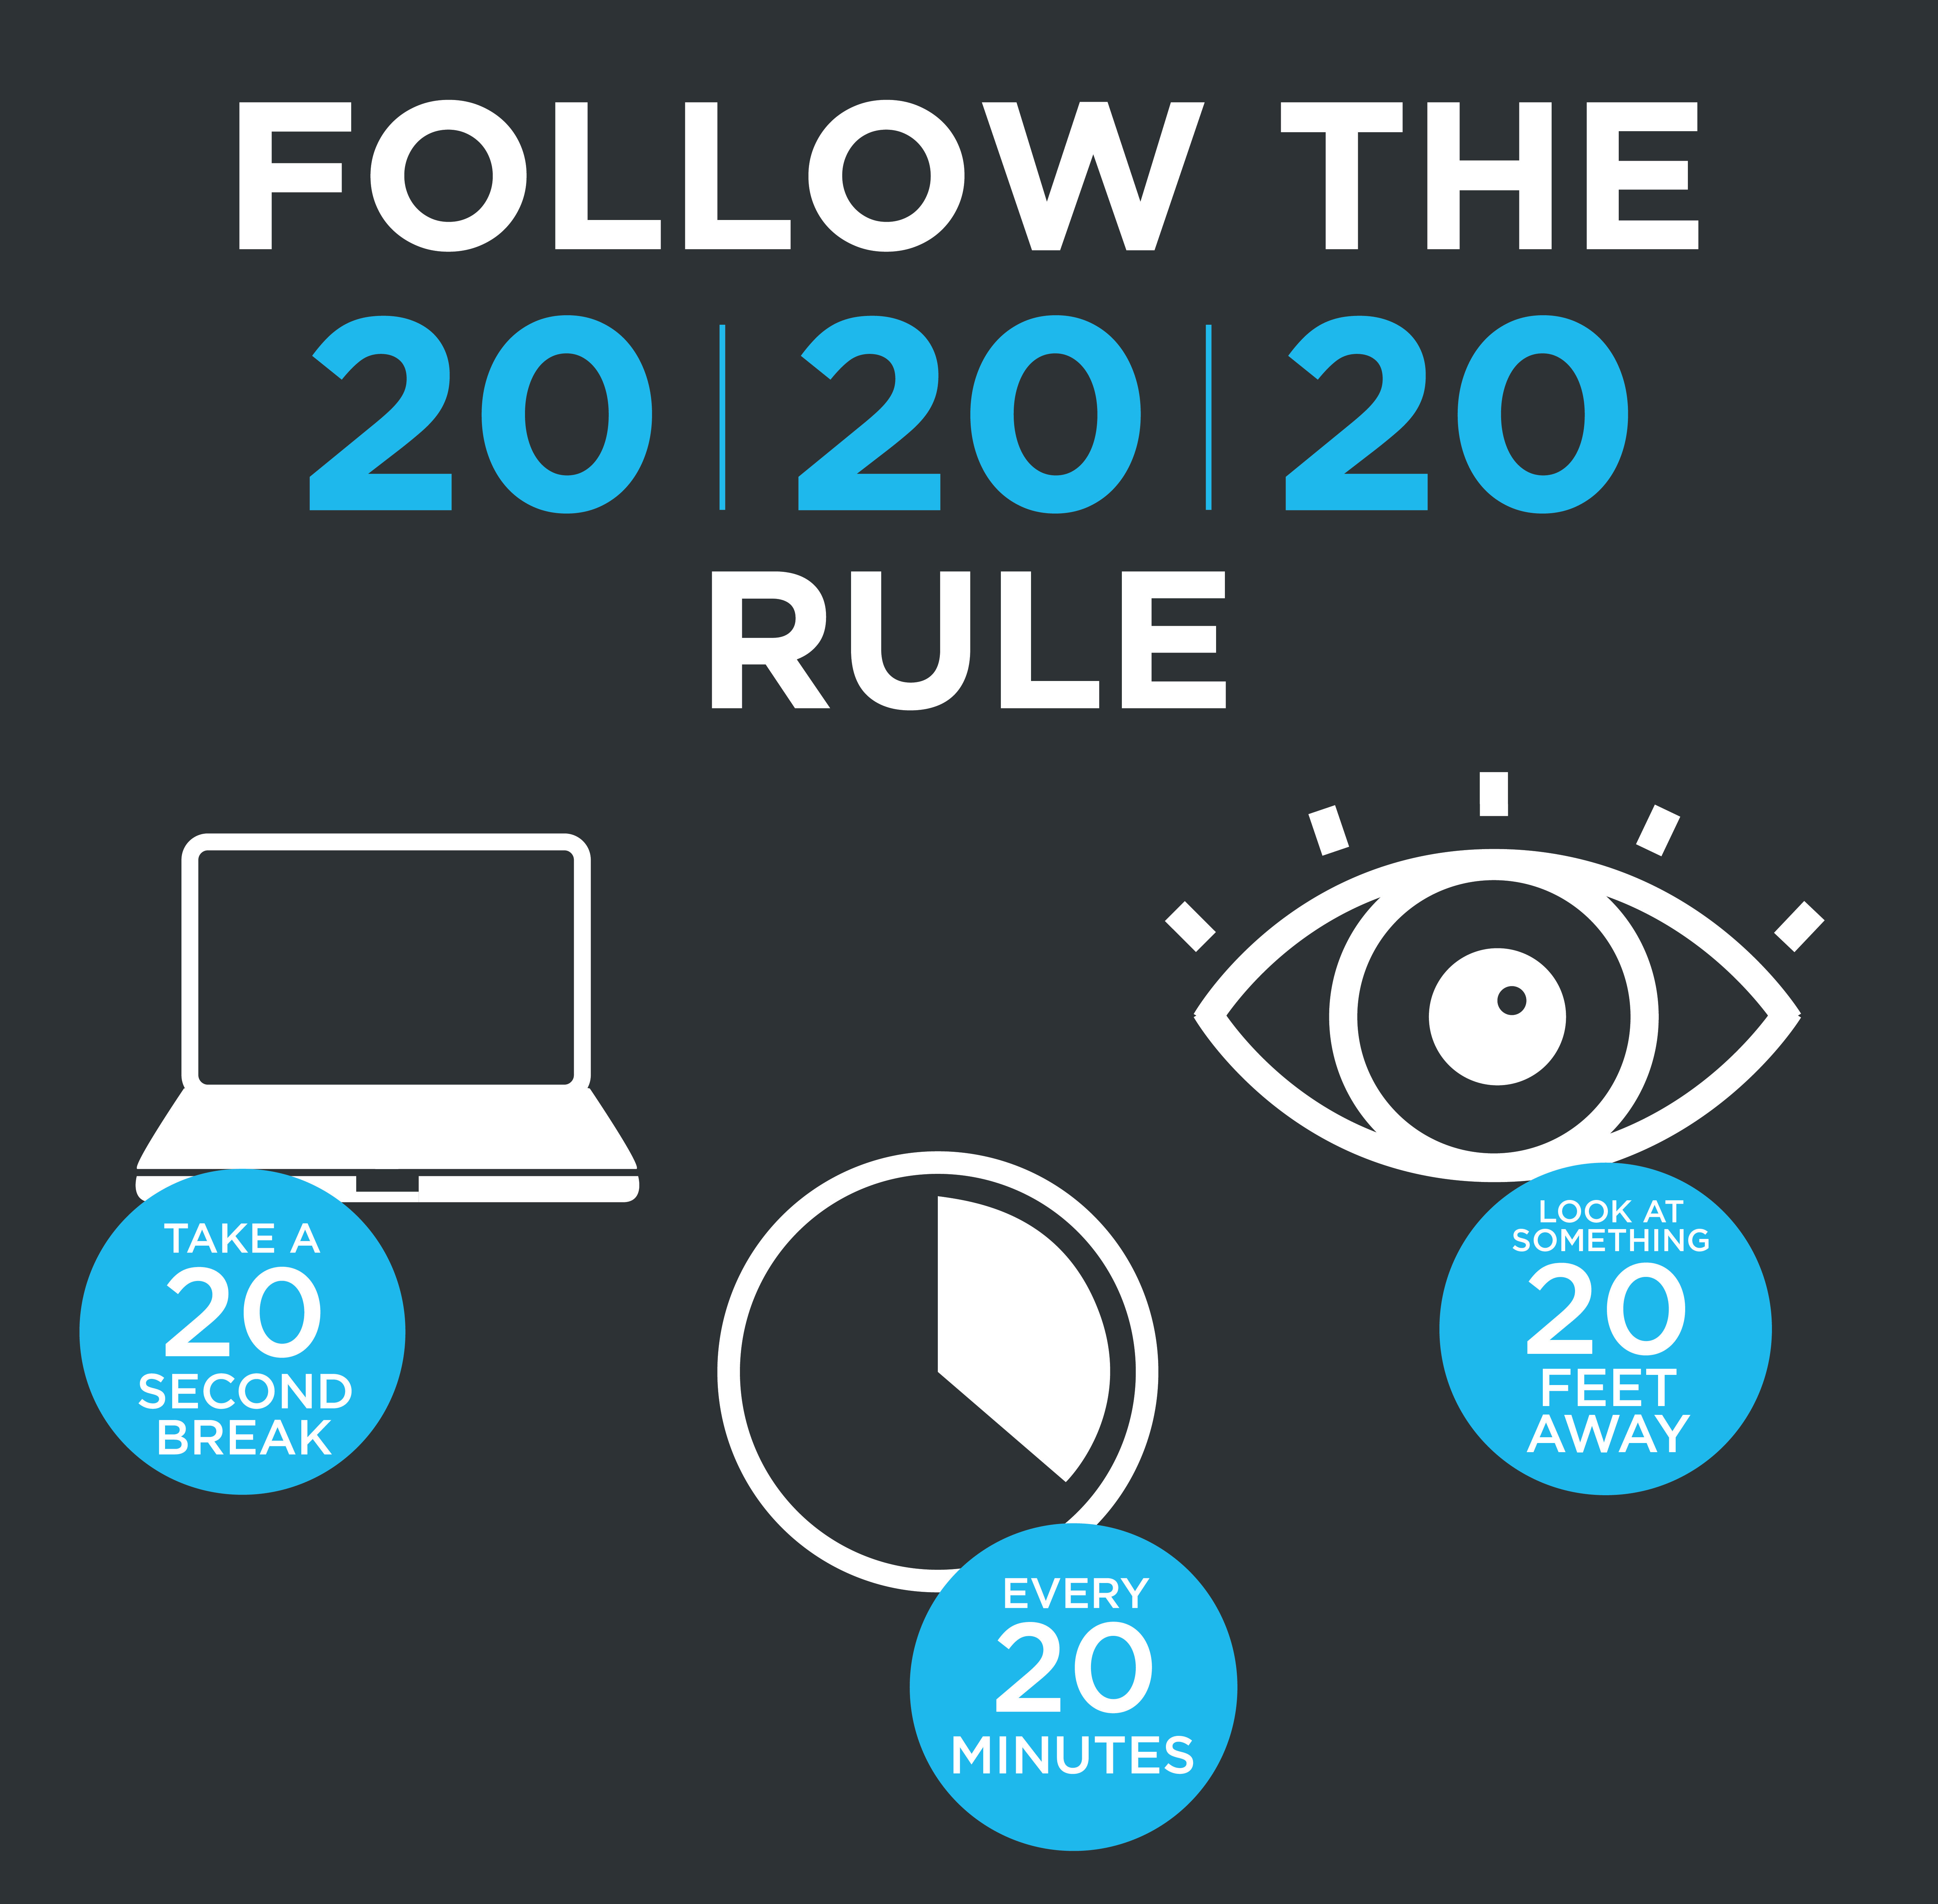 Follow the 20/20/20 rule